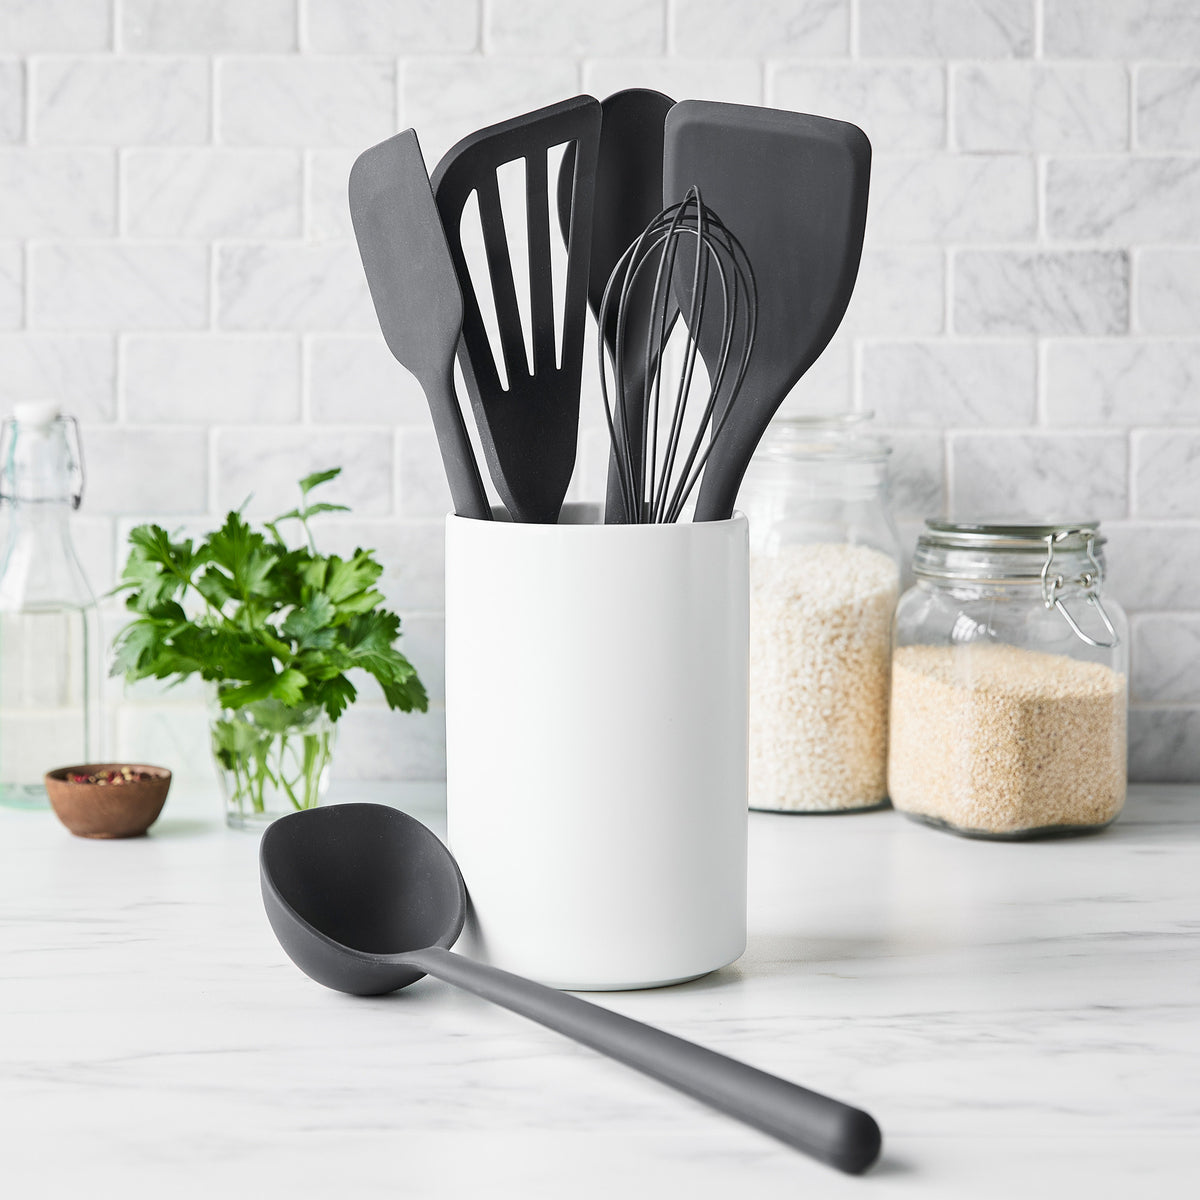 DIREKT 3-piece kitchen utensil set, black, stainless steel - IKEA